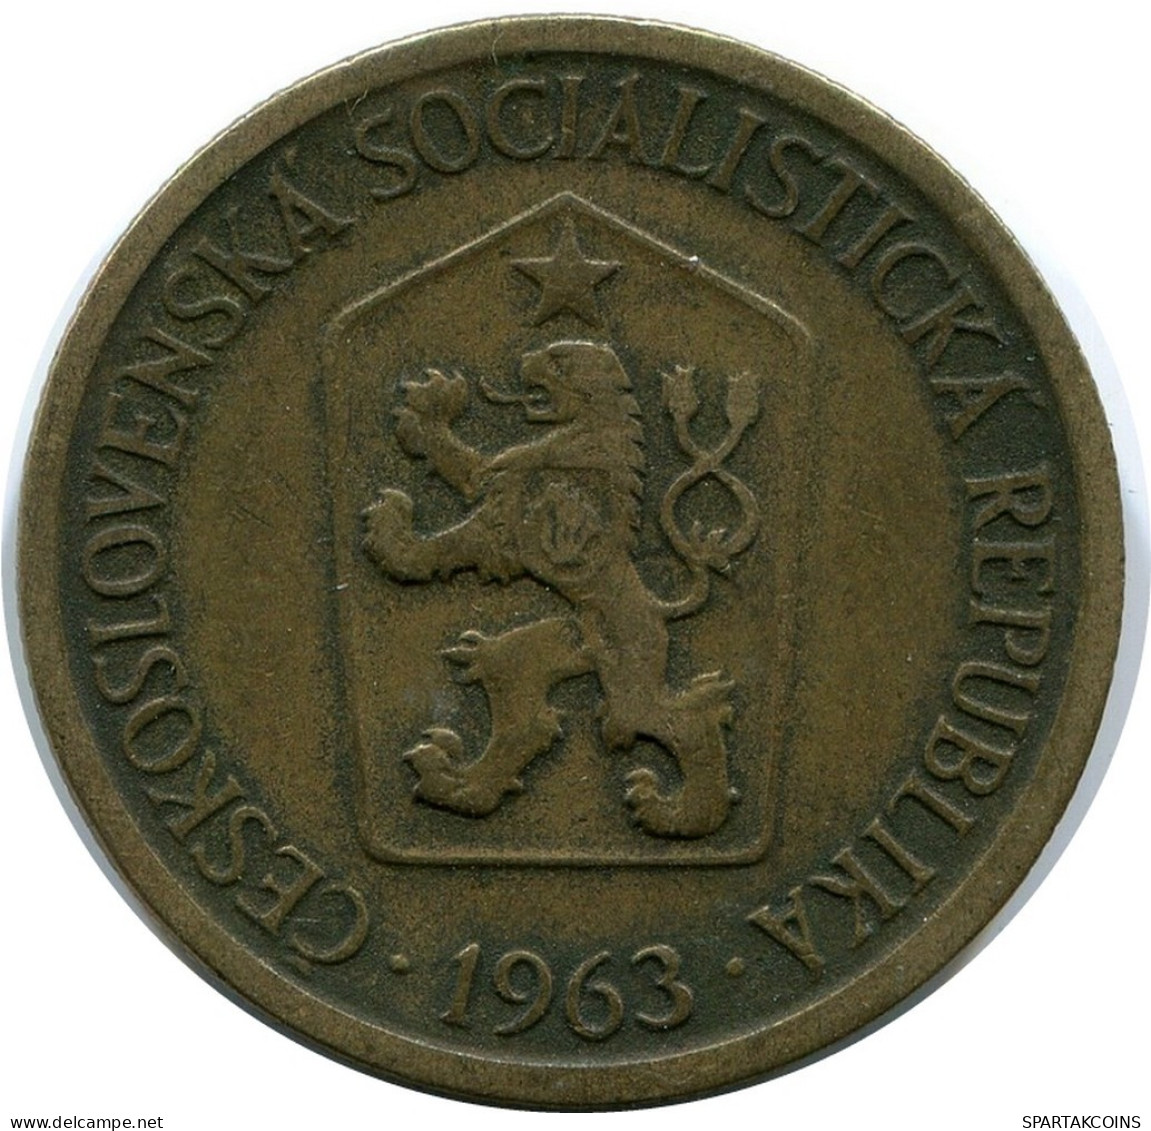 1 KORUNA 1936 TSCHECHOSLOWAKEI CZECHOSLOWAKEI SLOVAKIA Münze #AR227.D.A - Tschechoslowakei